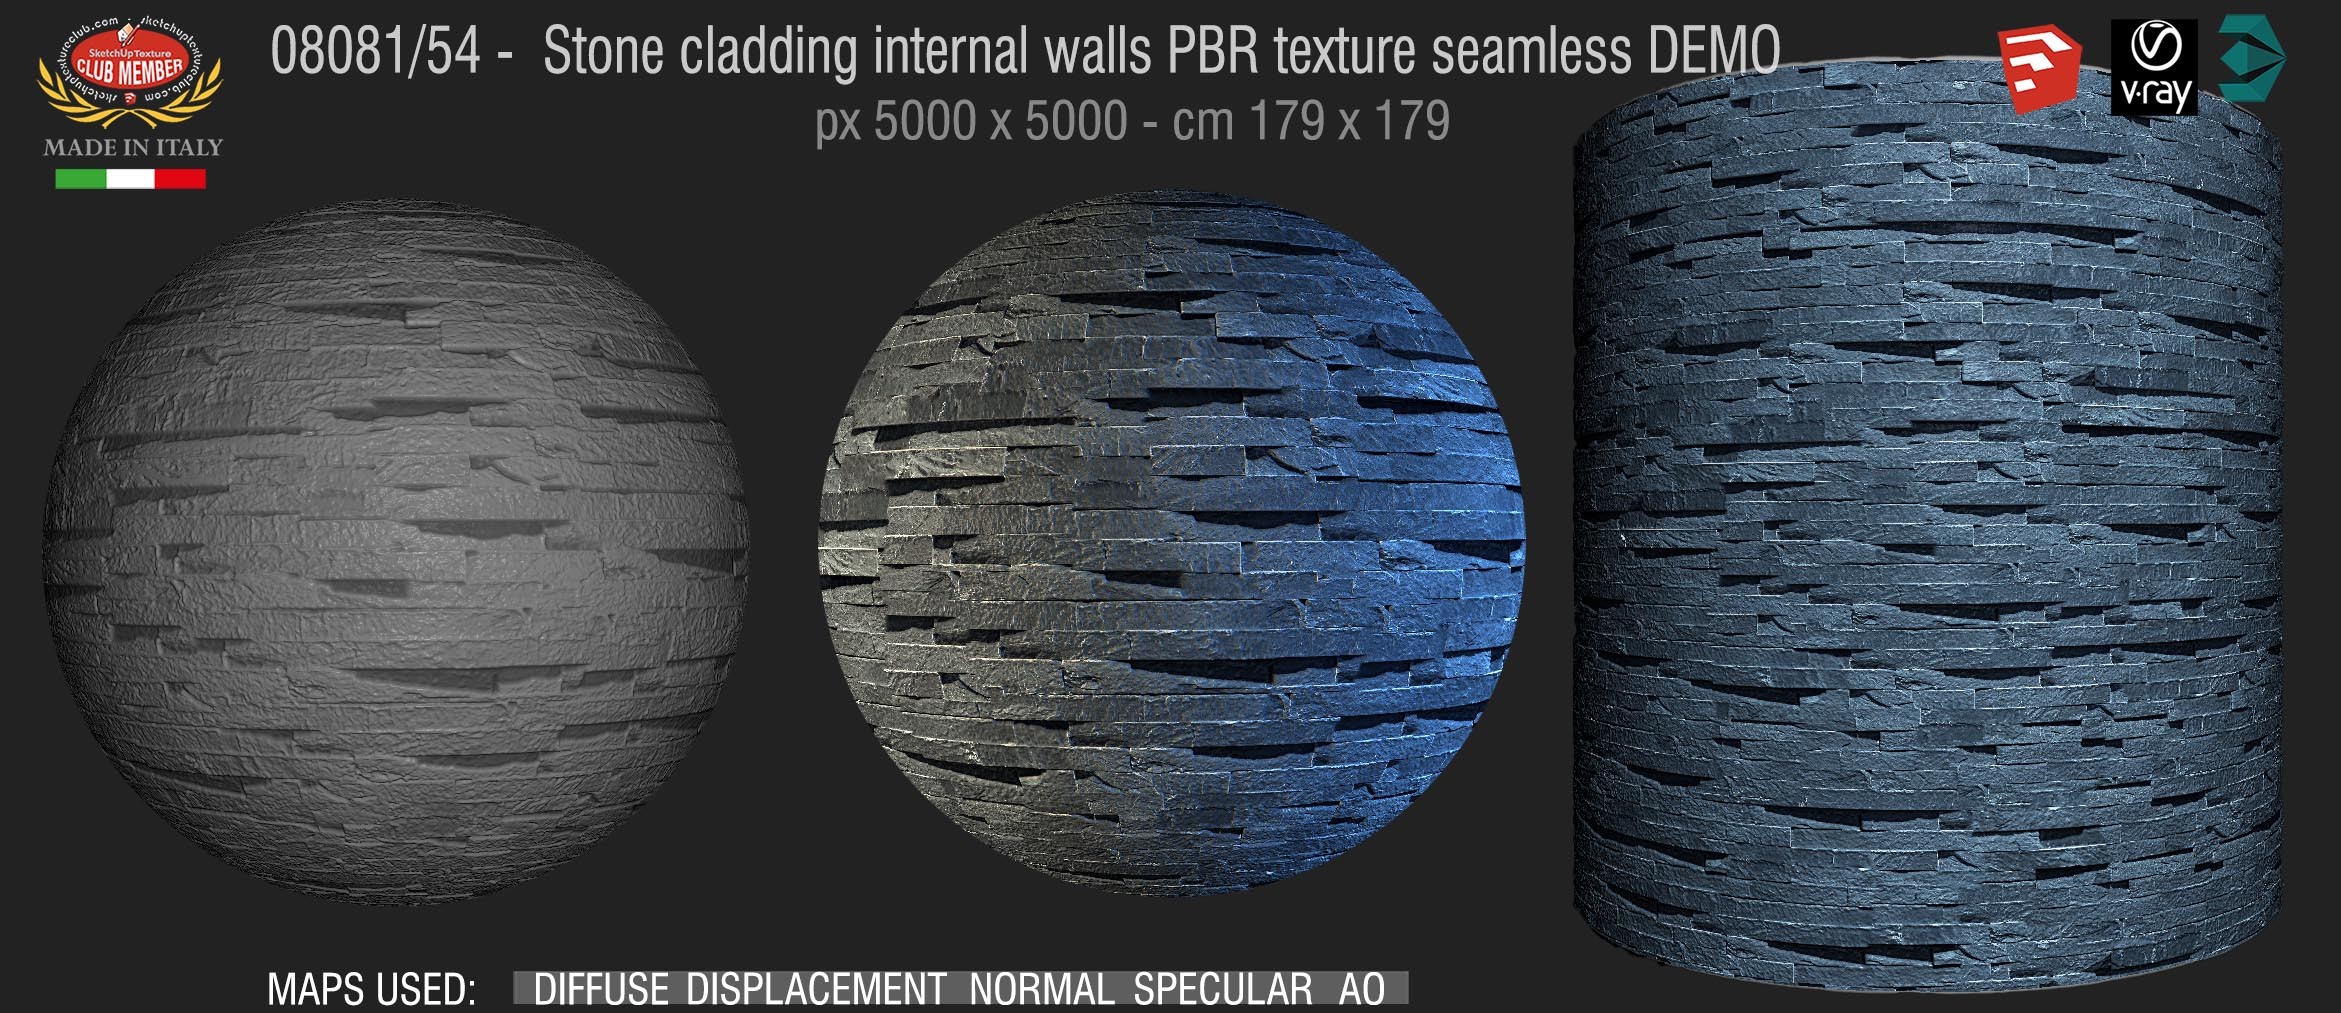 08081_54 Stone cladding internal walls PBR texture seamless DEMO